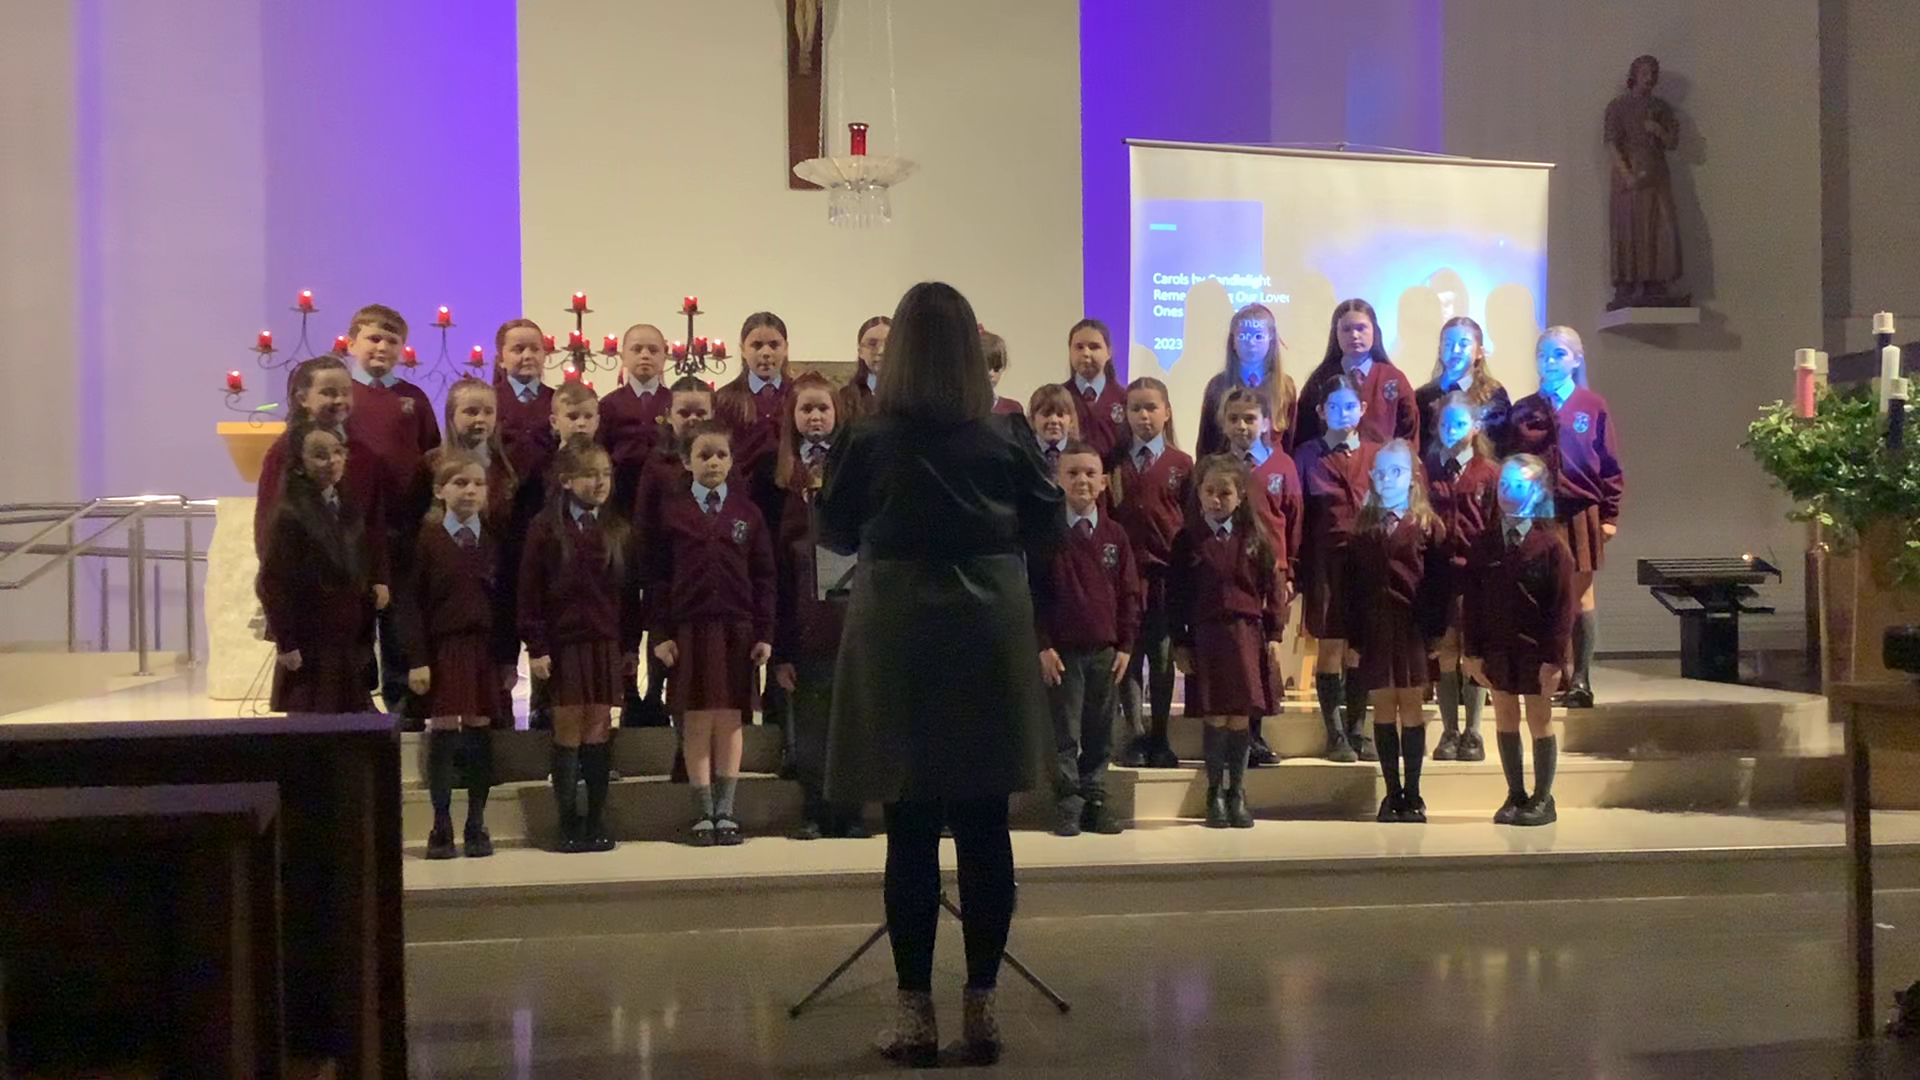 Merry Christmas from the School Choir